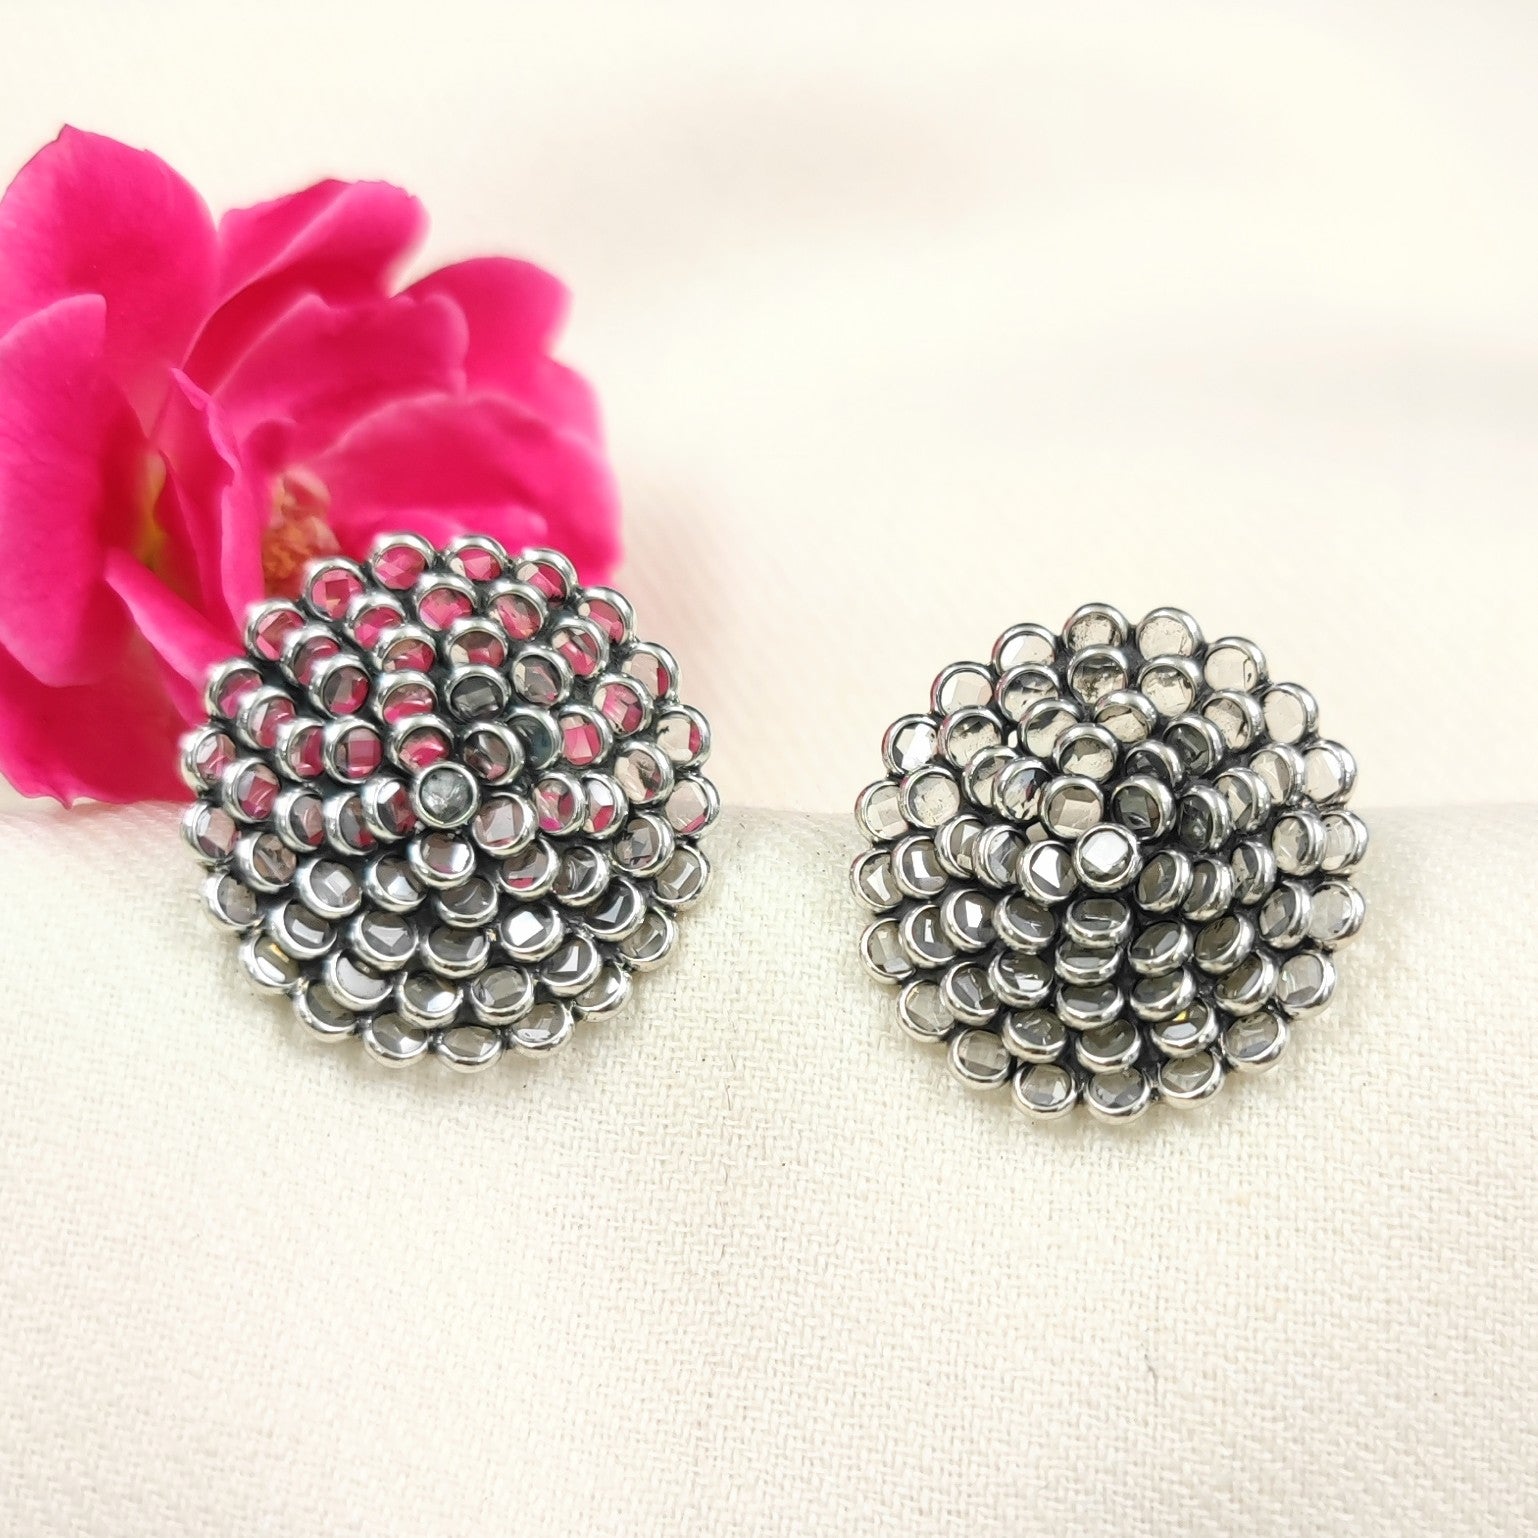 Silver Jewelry Earrings by Jauhri 92.5 Silver - Keshwa Studs